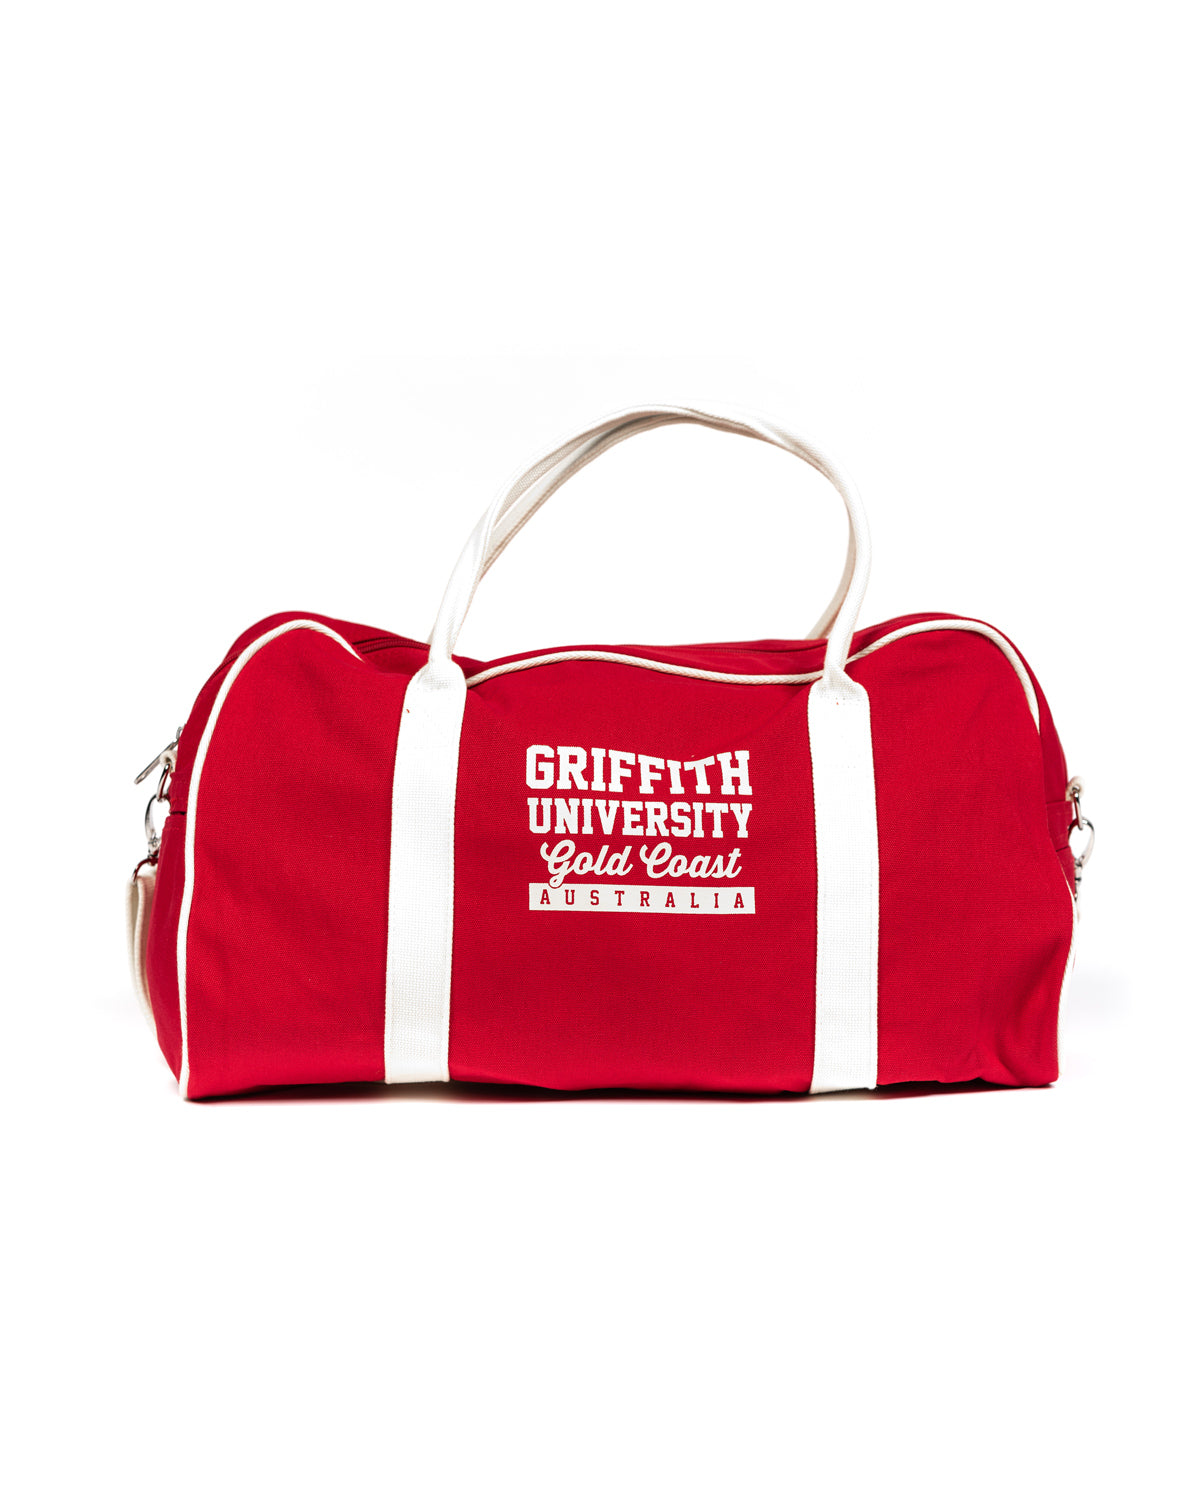 Griffith duffle bag